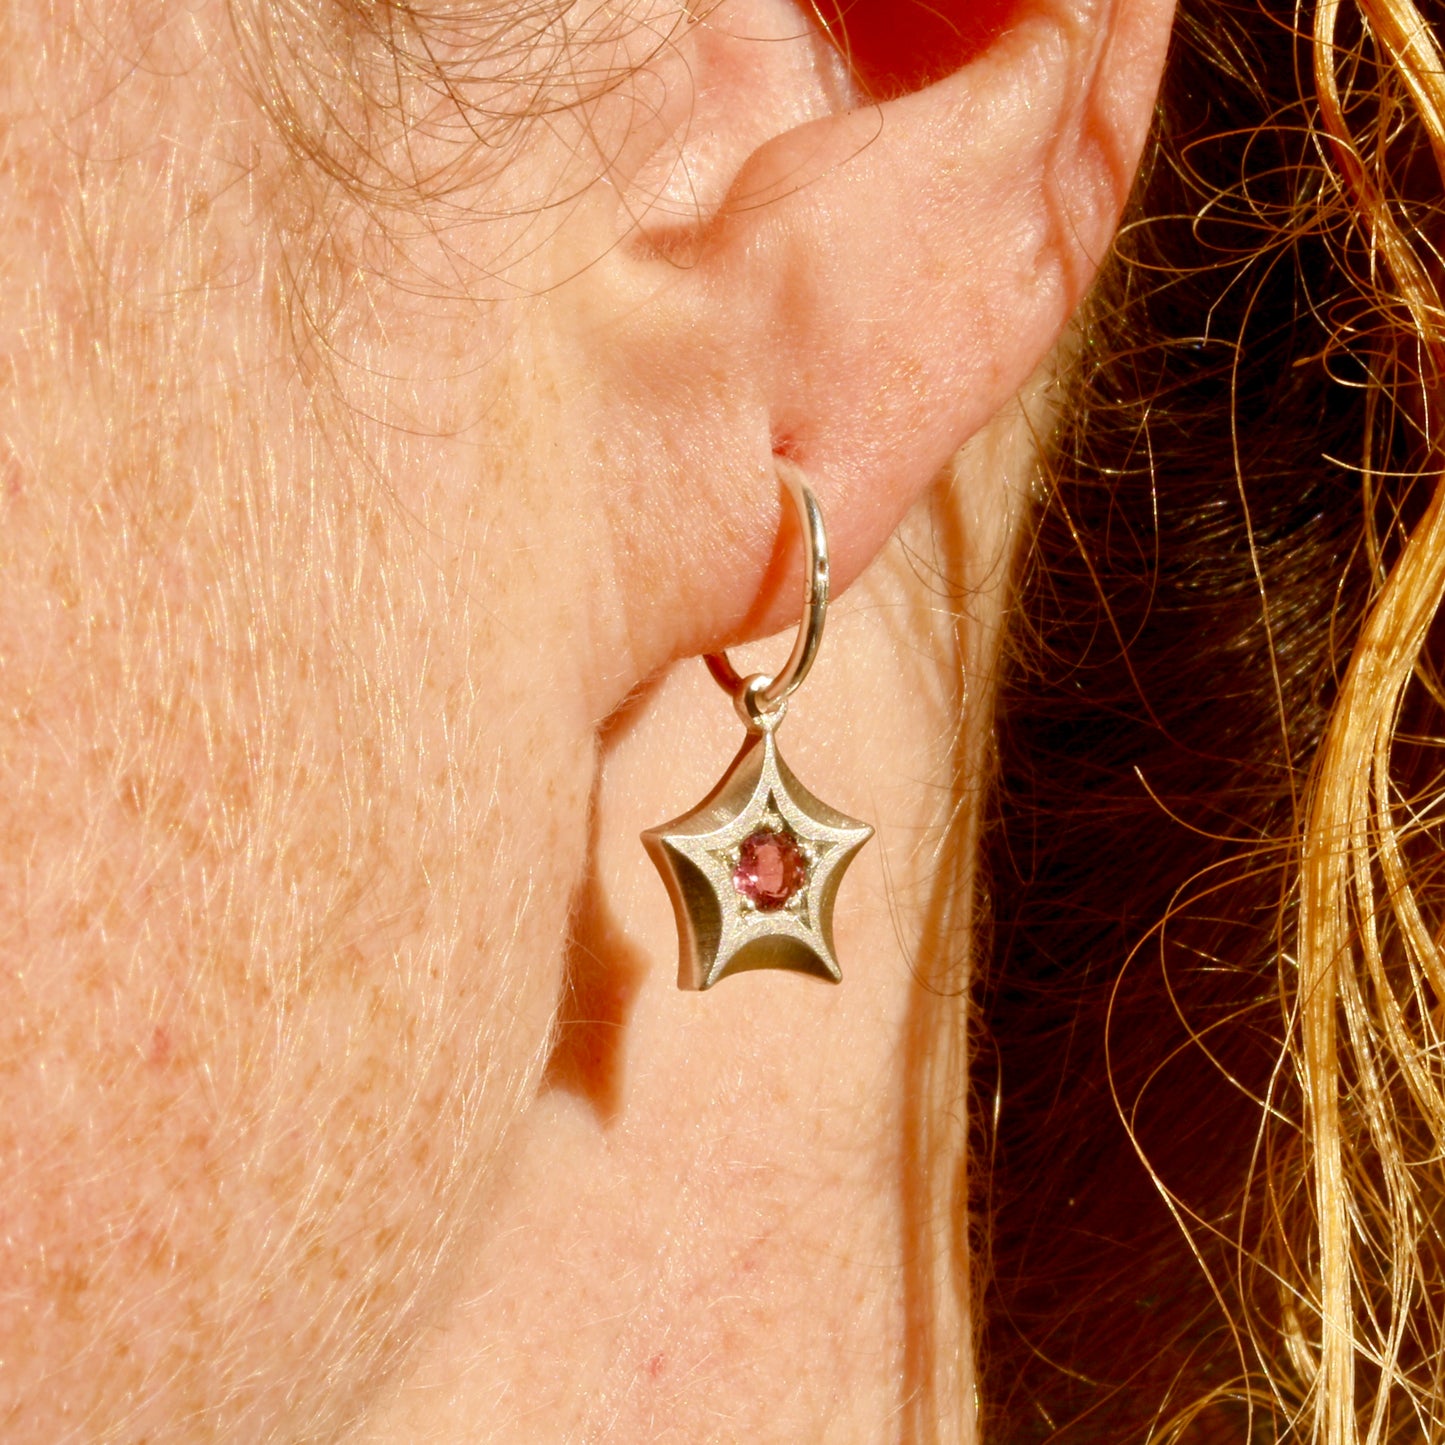 Pink tourmaline wishing star earrings